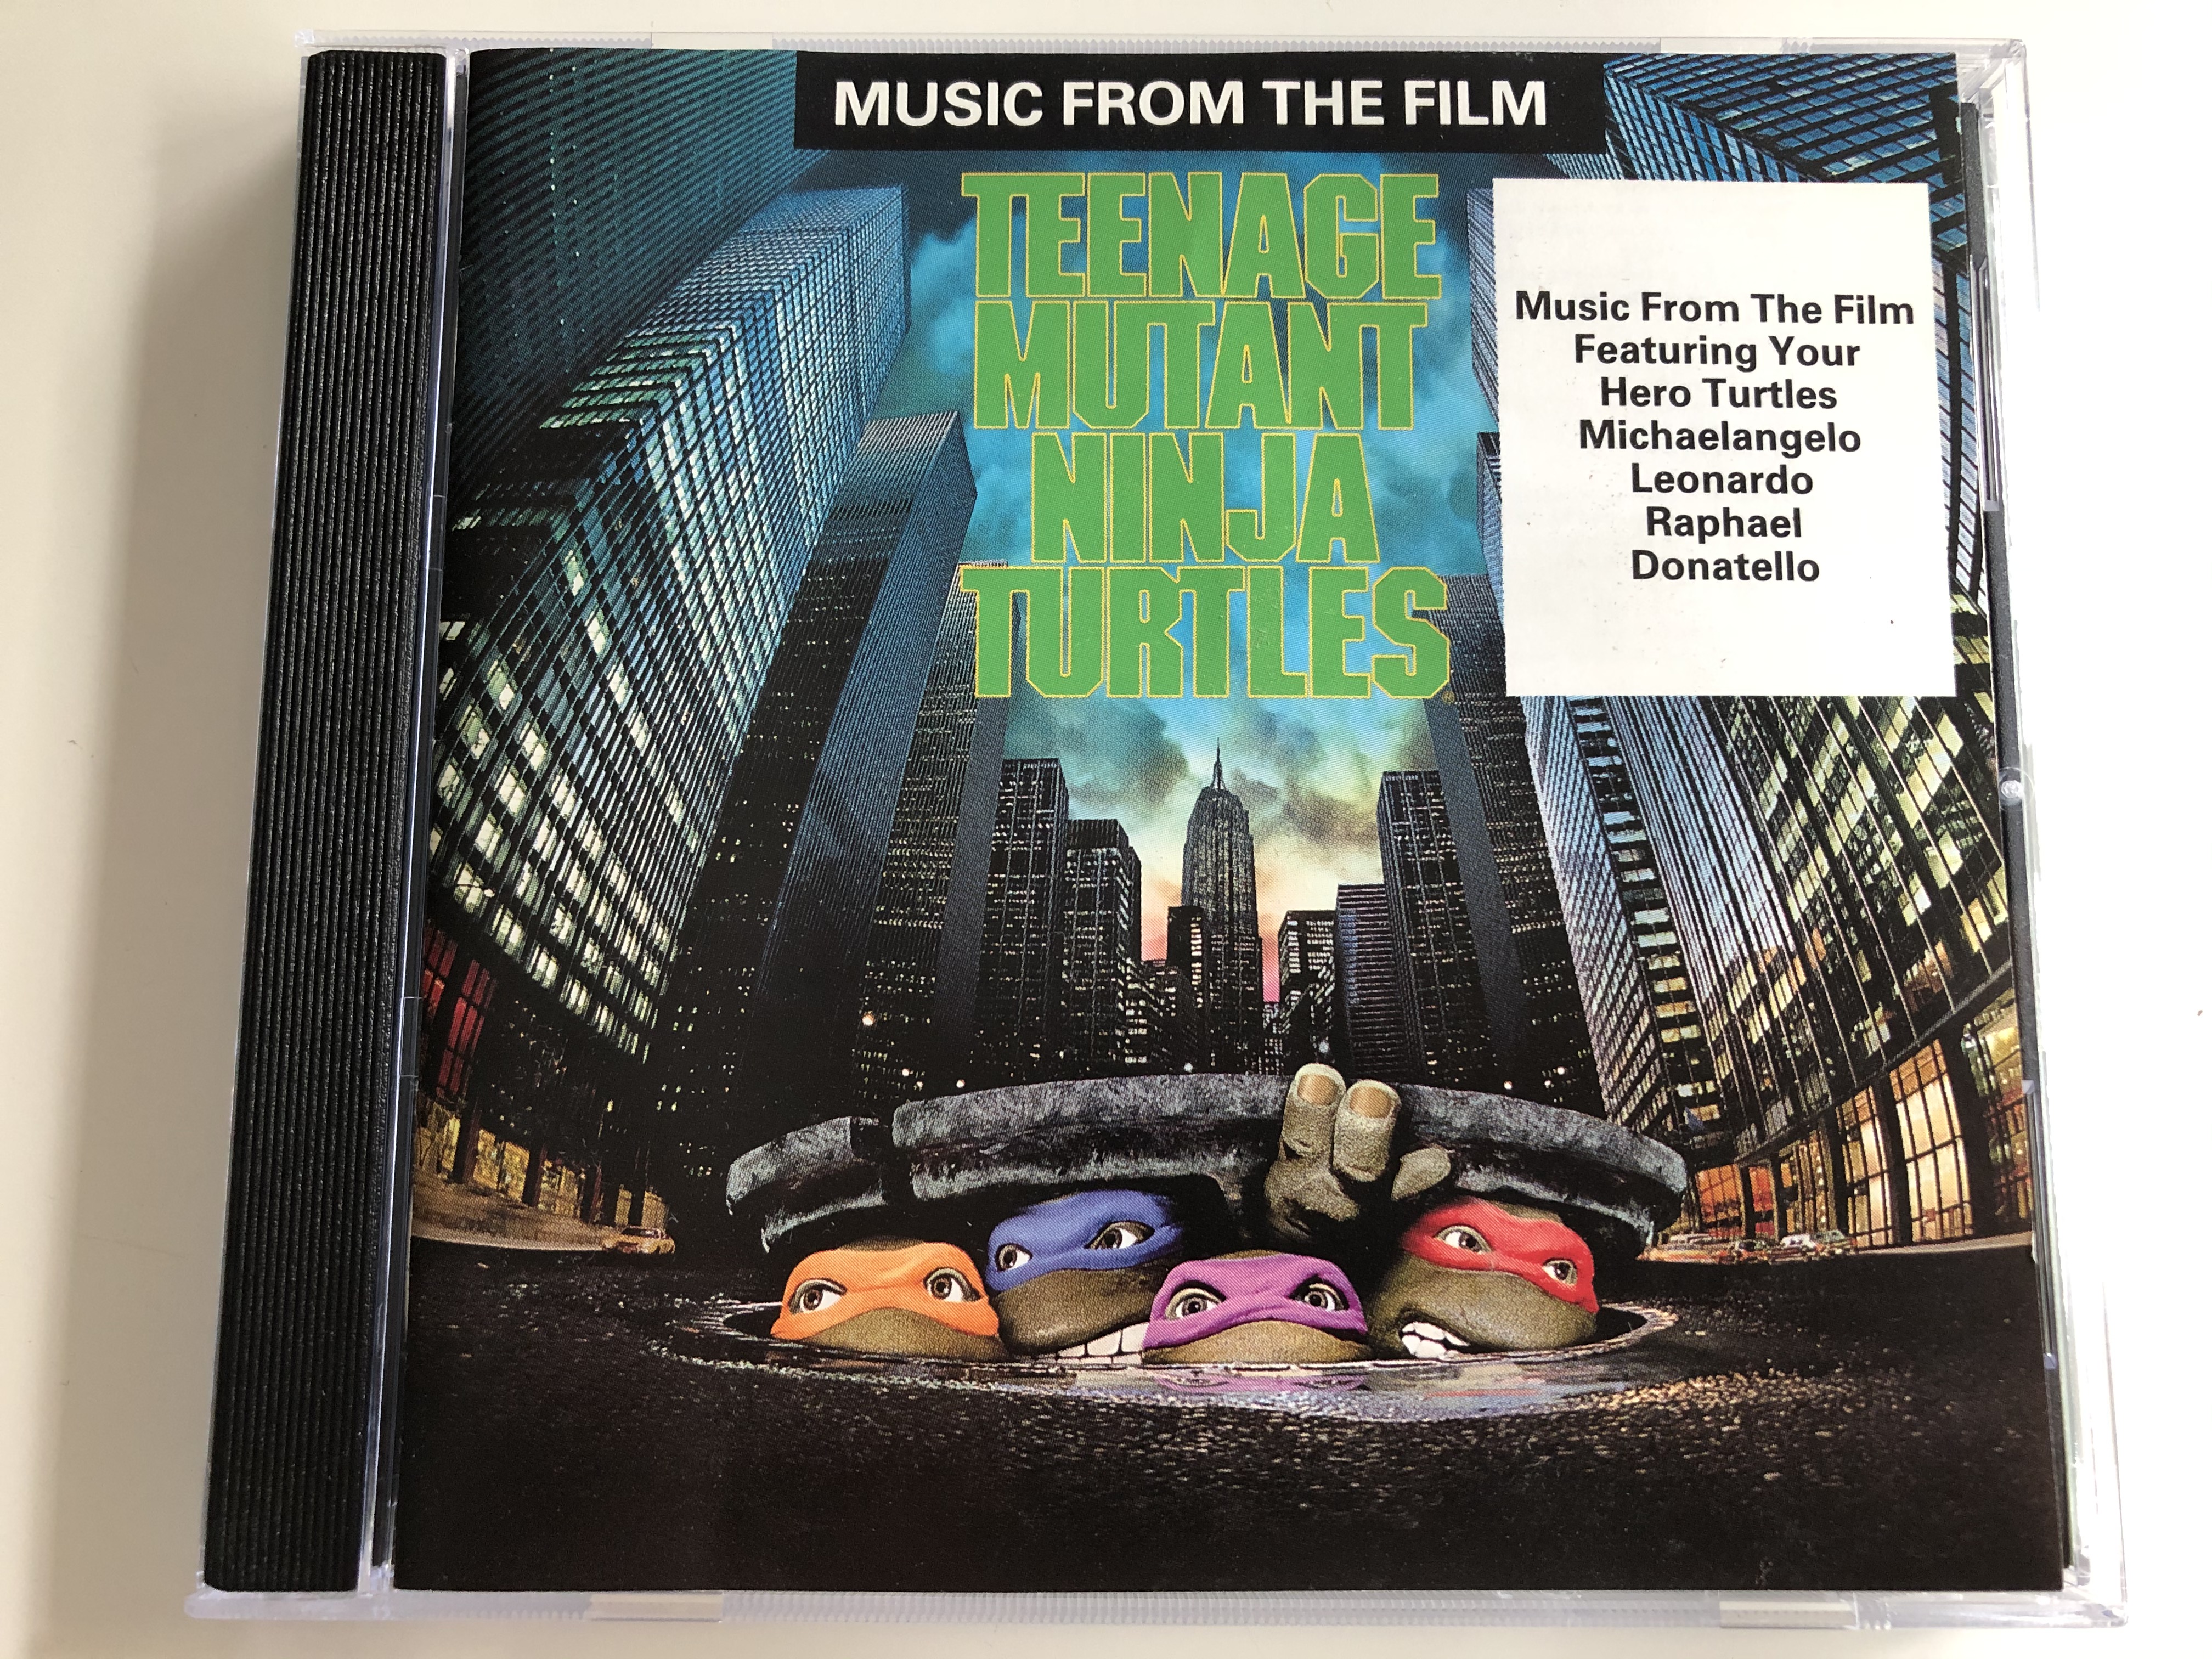 music-from-the-film-teenage-mutant-ninja-turtles-featuring-your-hero-turtles-michaelangelo-leonardo-raphael-donatello-sbk-records-audio-cd-1990-cdp-79-1066-2-1-.jpg